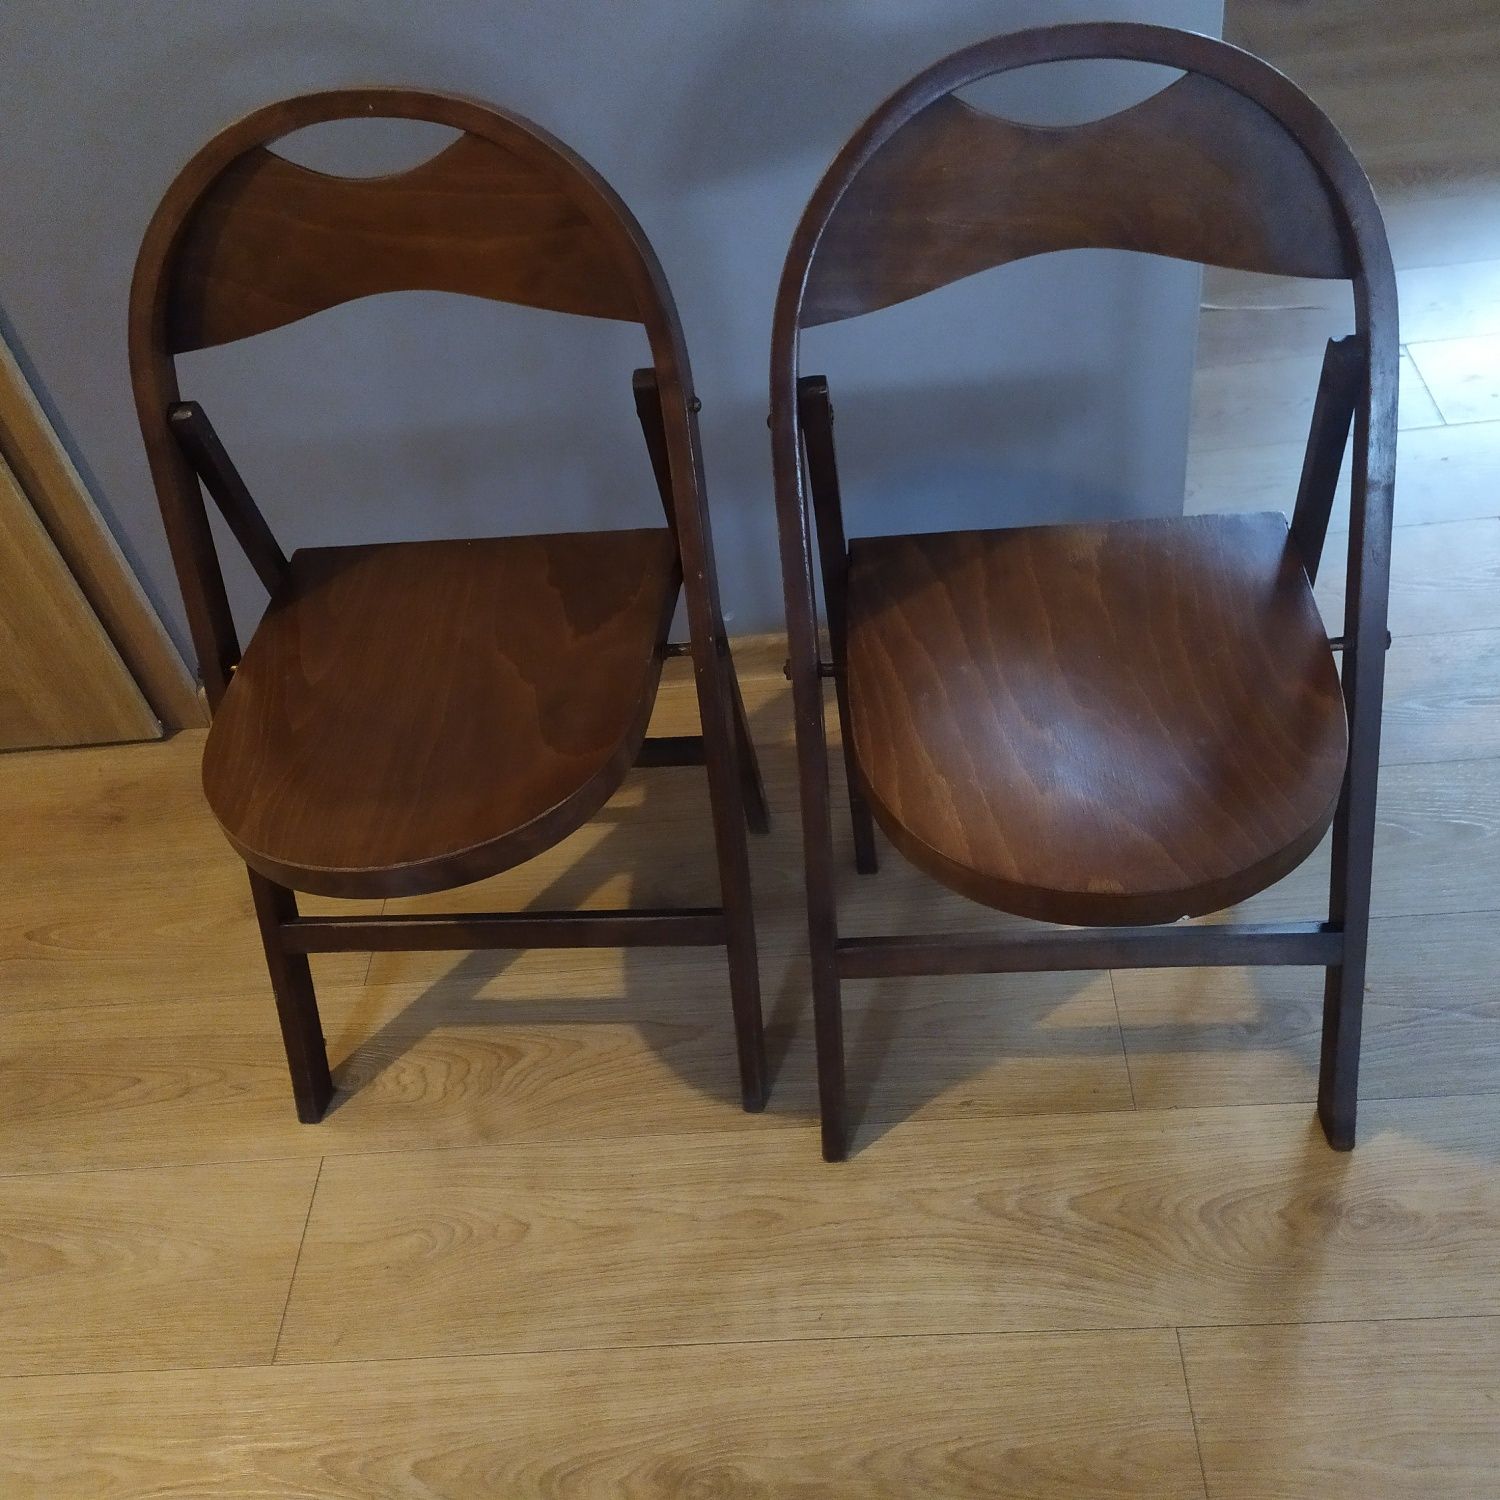 Krzesla thonet b751 2sztuki  cena za sztuke